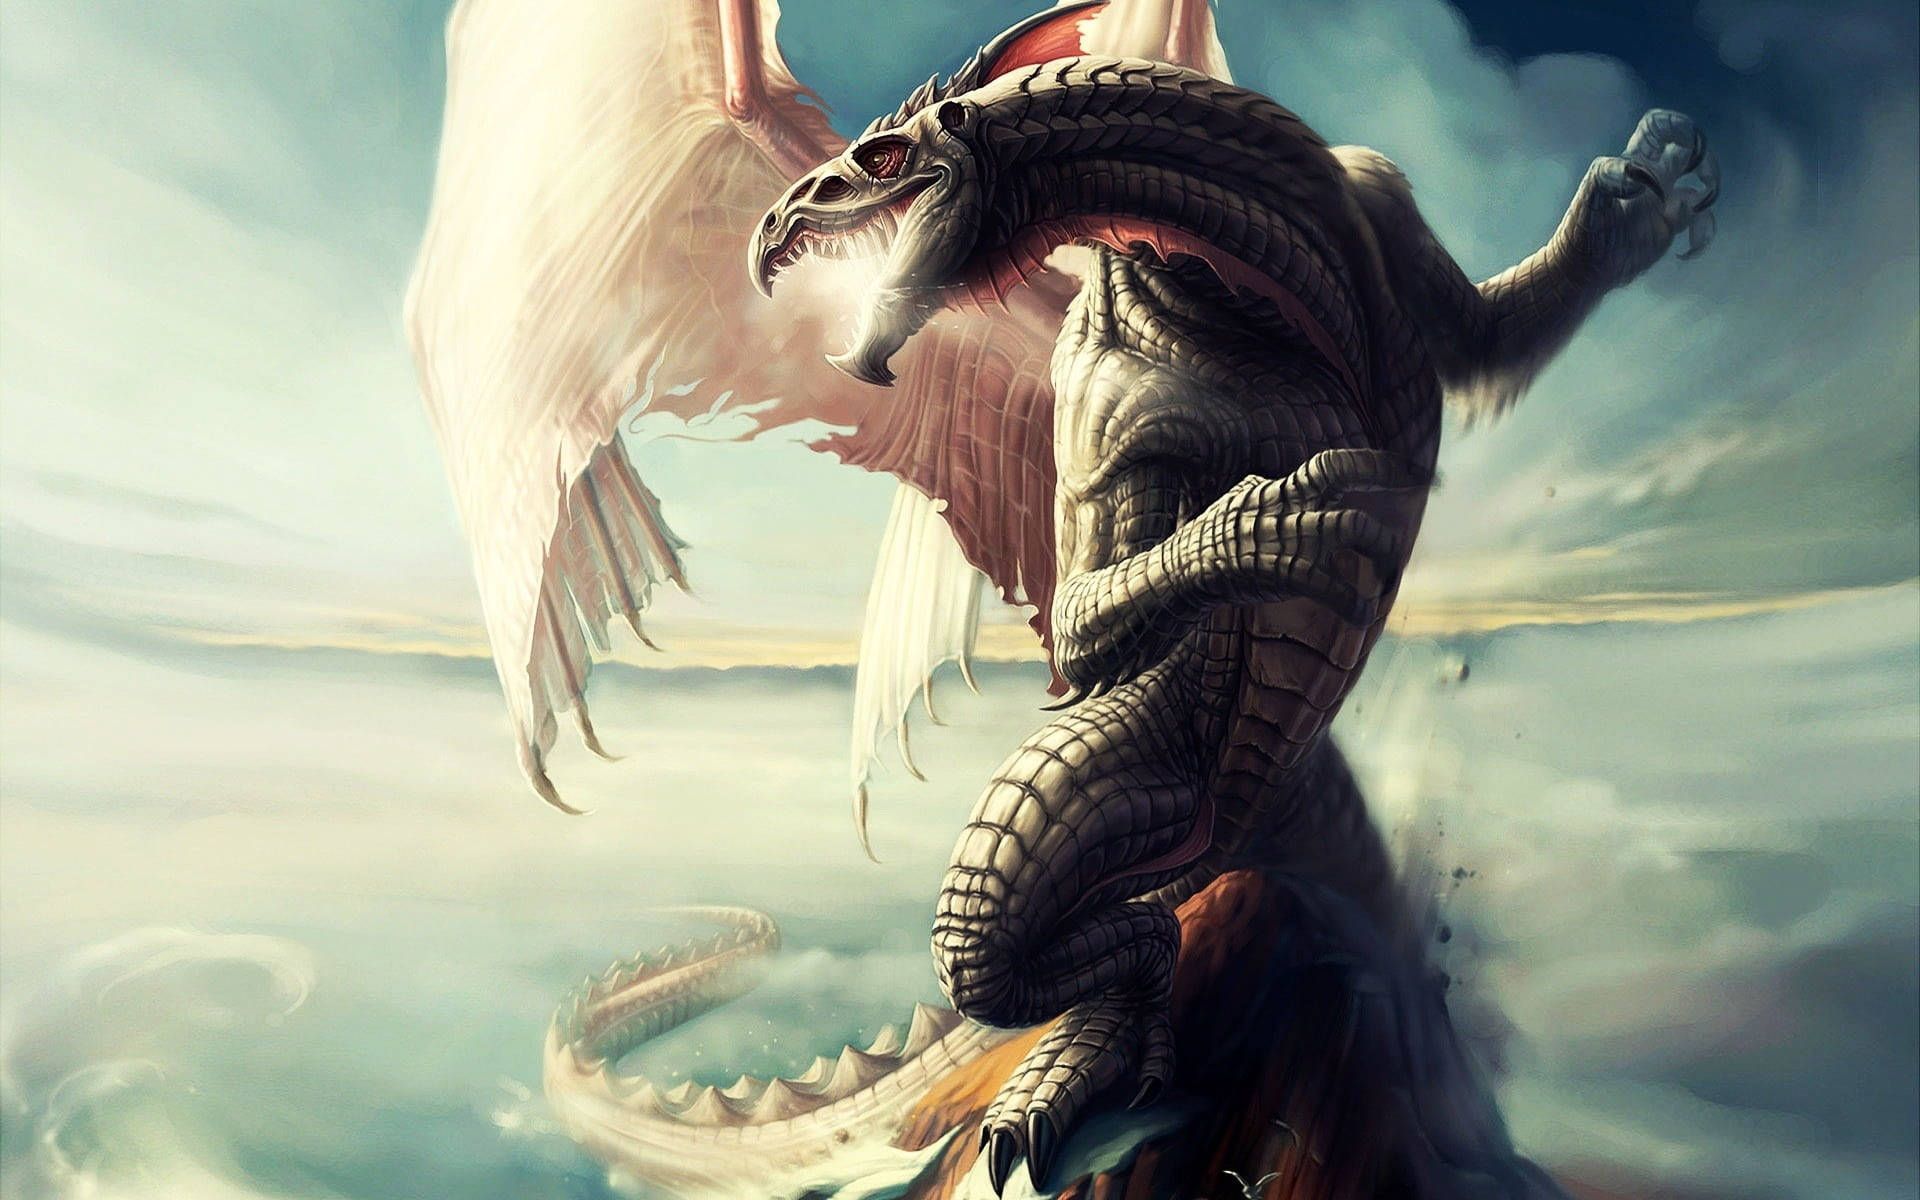  Drachen Hintergrundbild 1920x1200. Free 3D Dragon Wallpaper Downloads, 3D Dragon Wallpaper for FREE